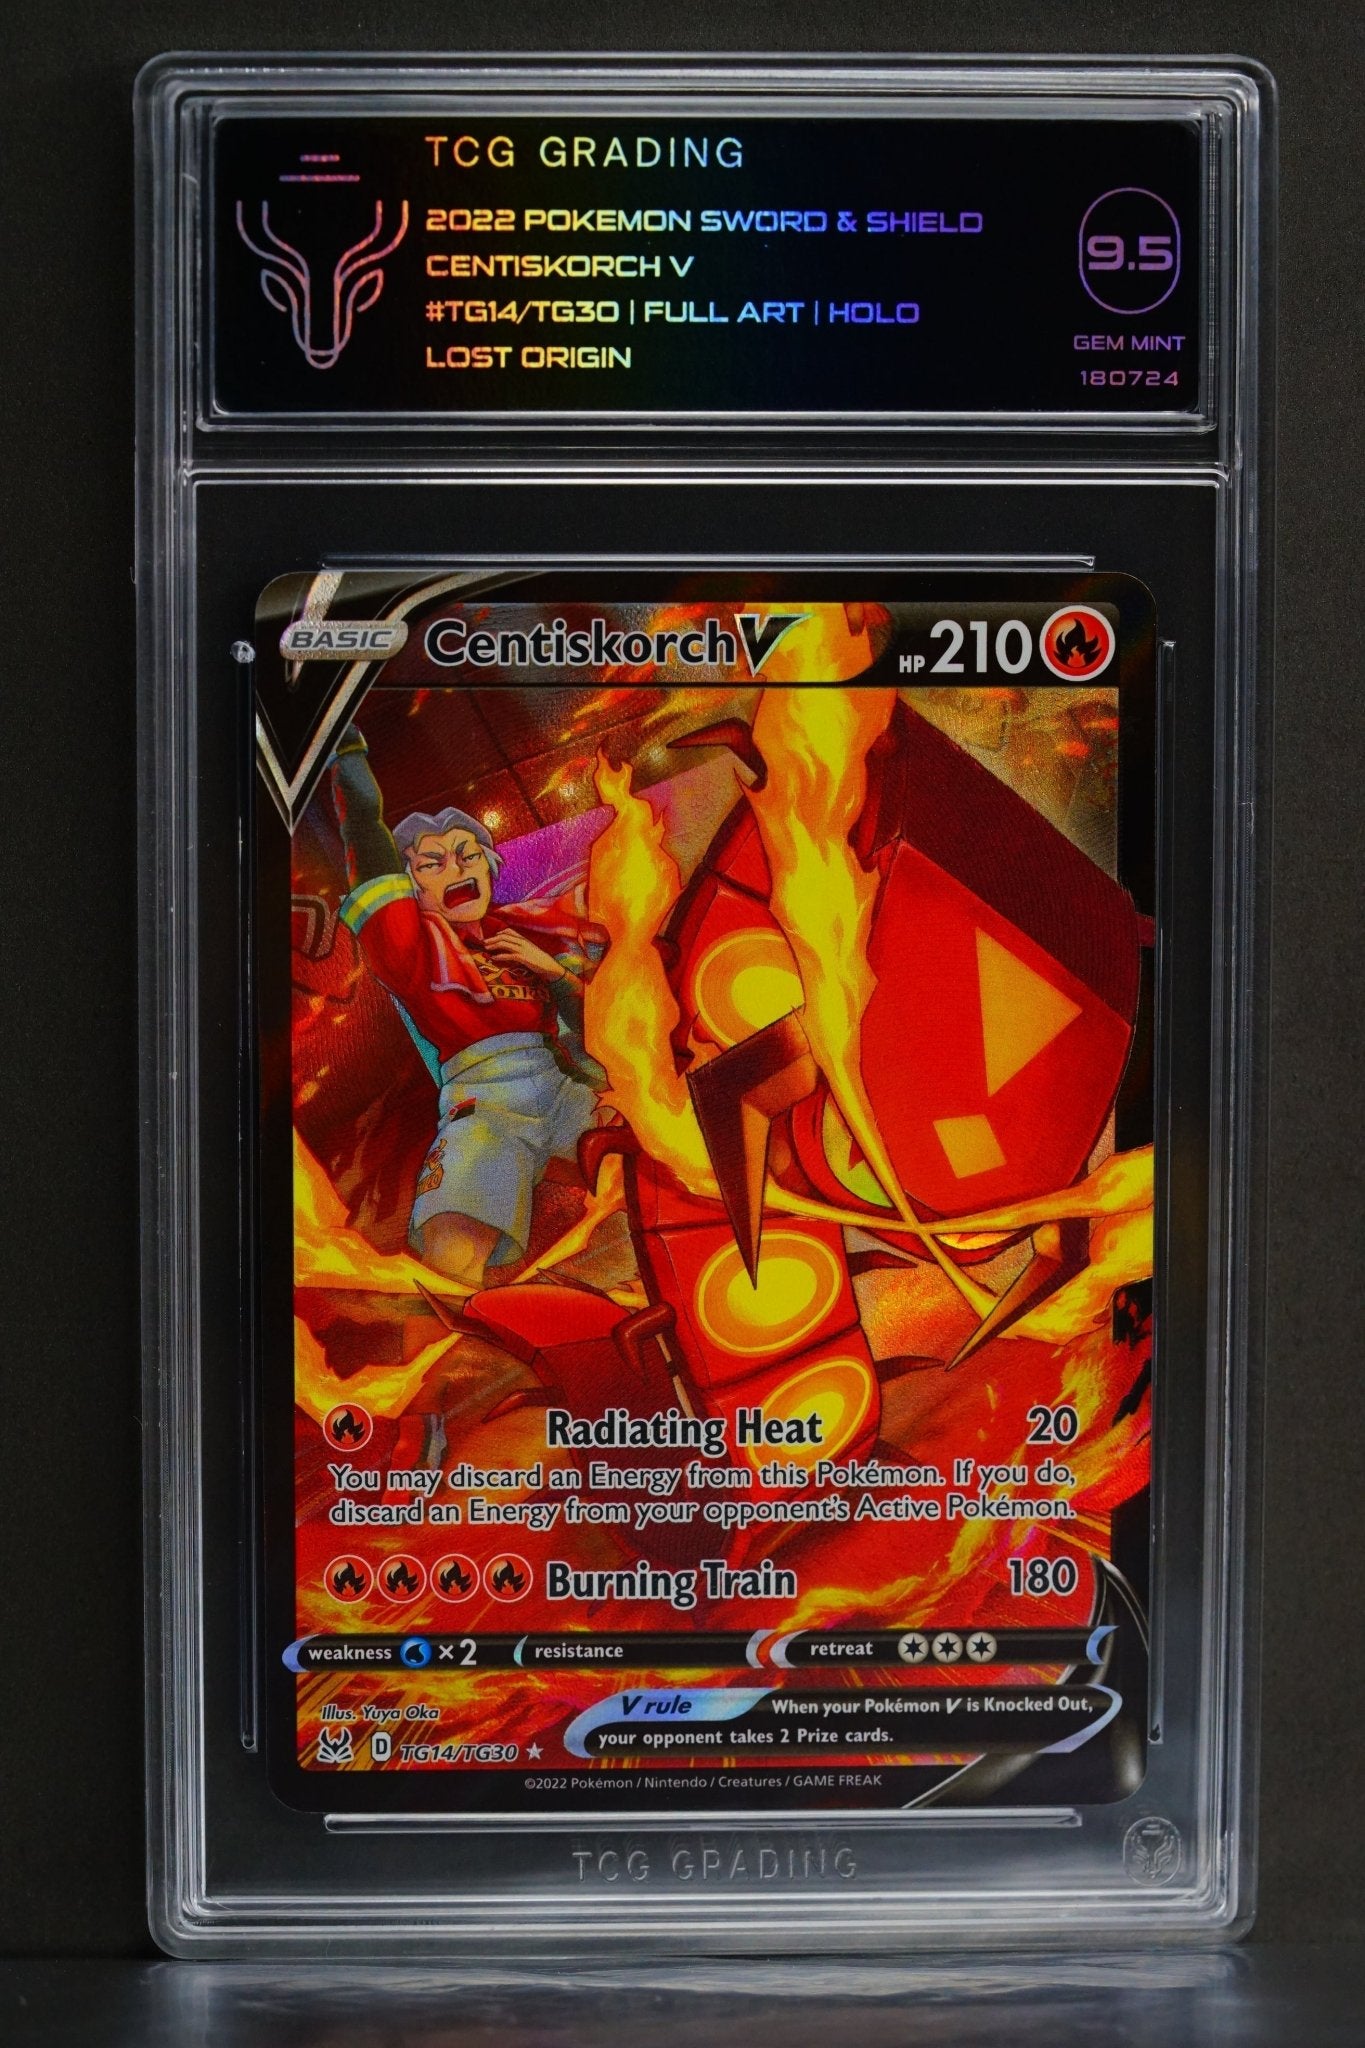 Pokemon Card: Centiskorch V Full Art TG14/TG30 9.5 - THE CARD SPOT PTY LTD.GradedPokémon